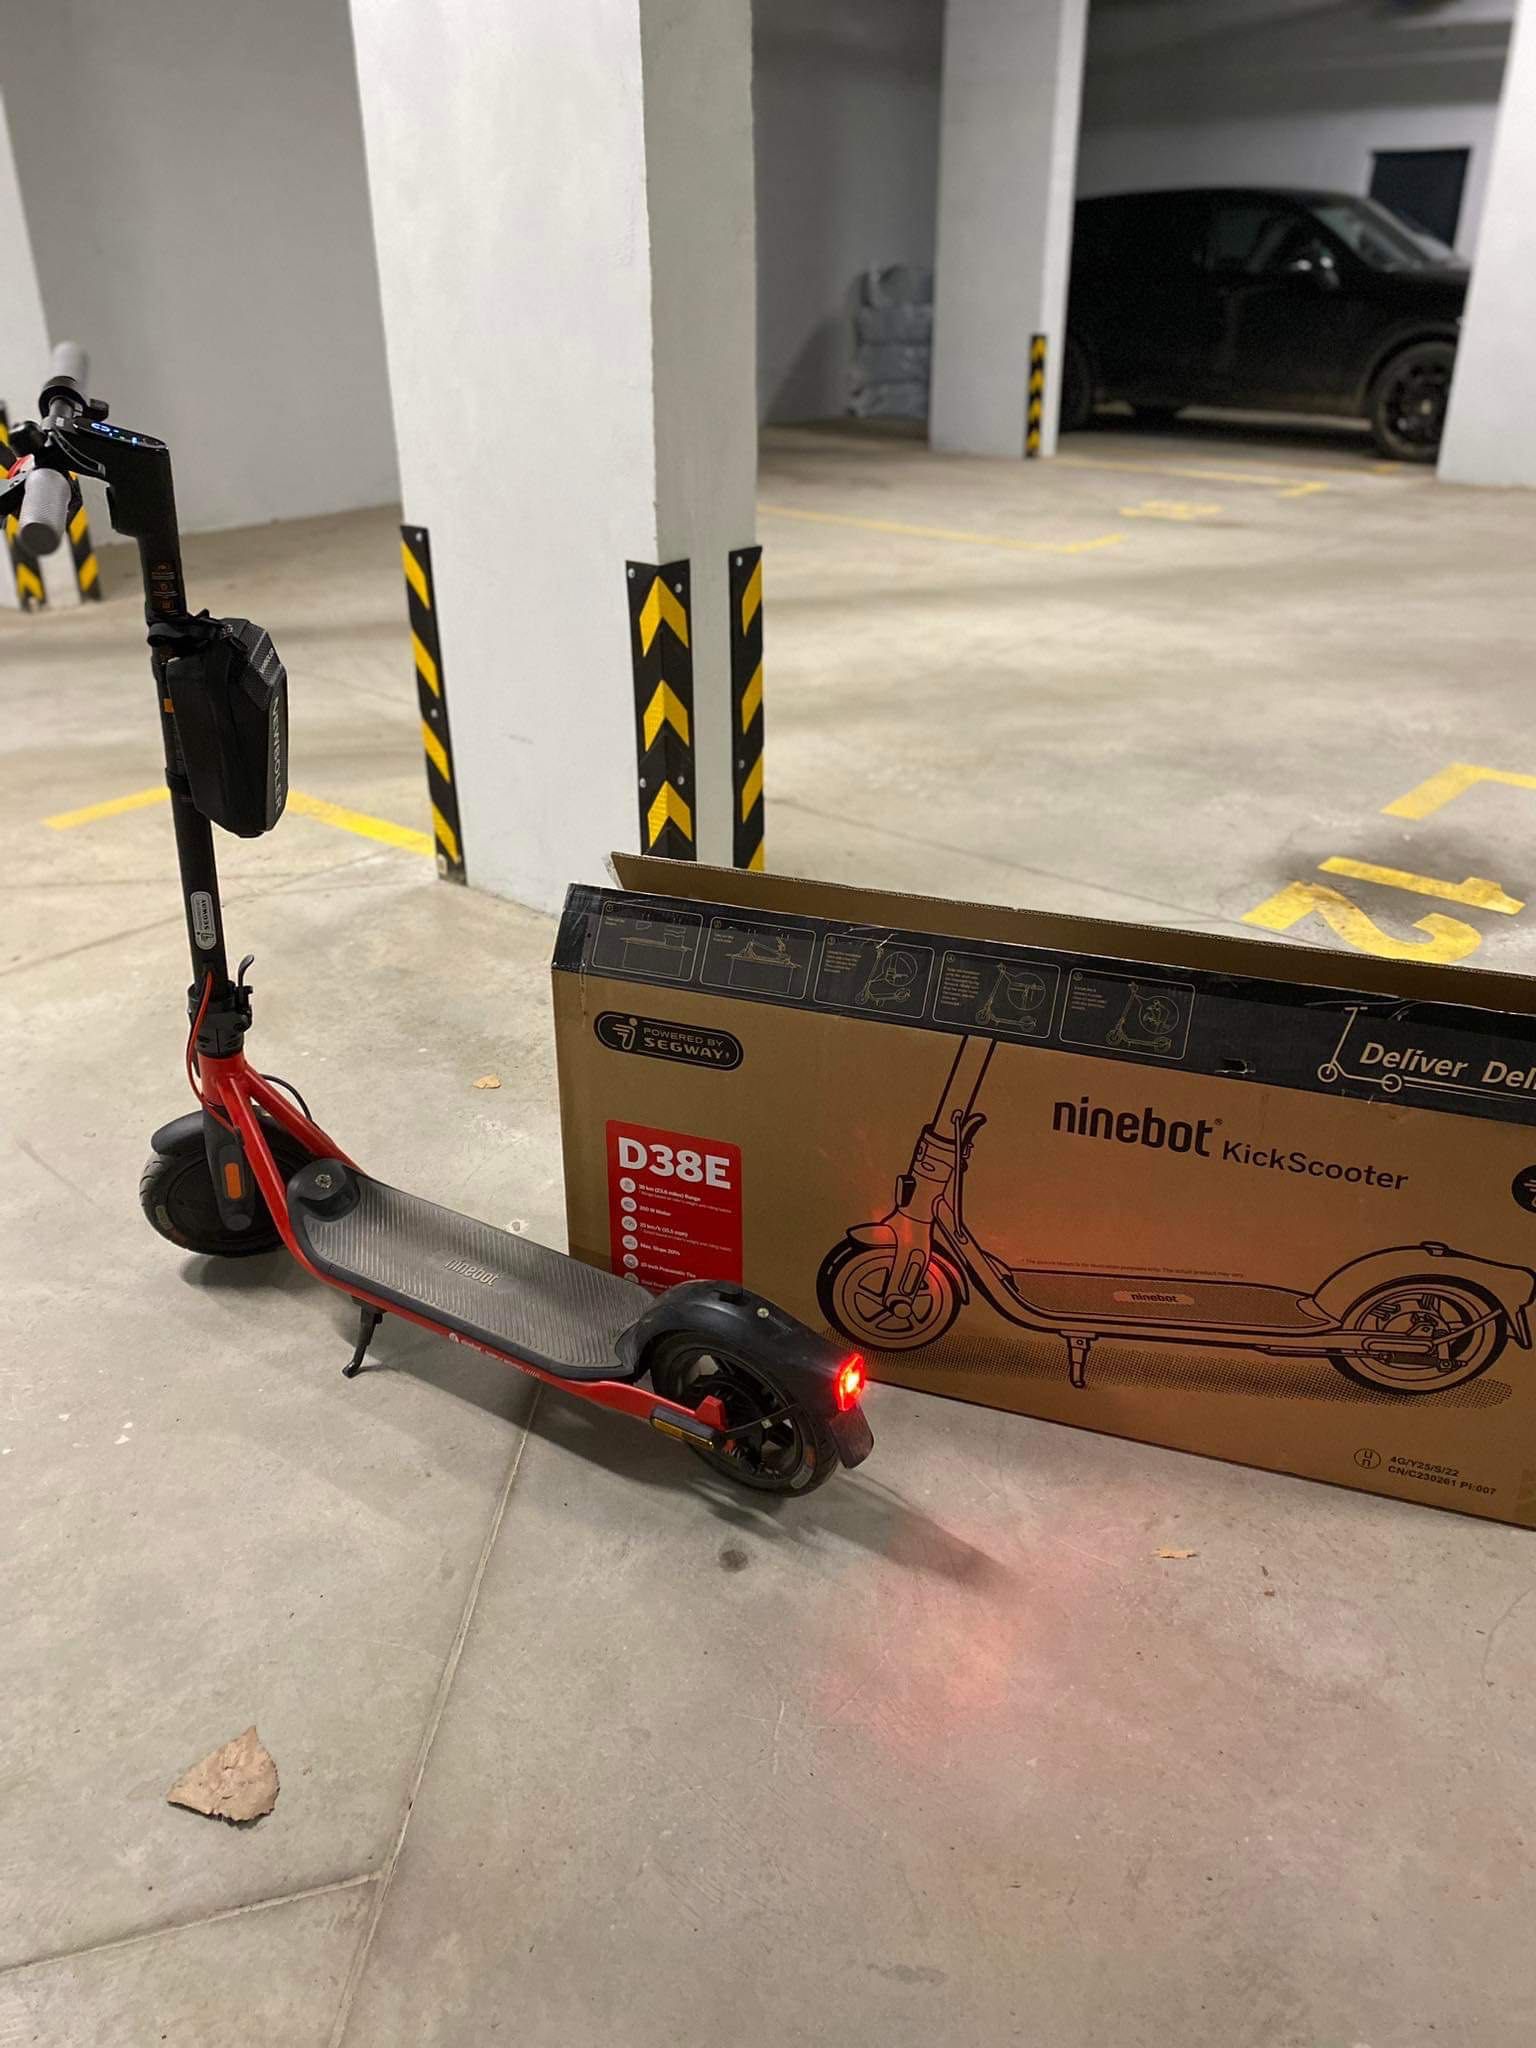 Електрически скутер - тротинетка